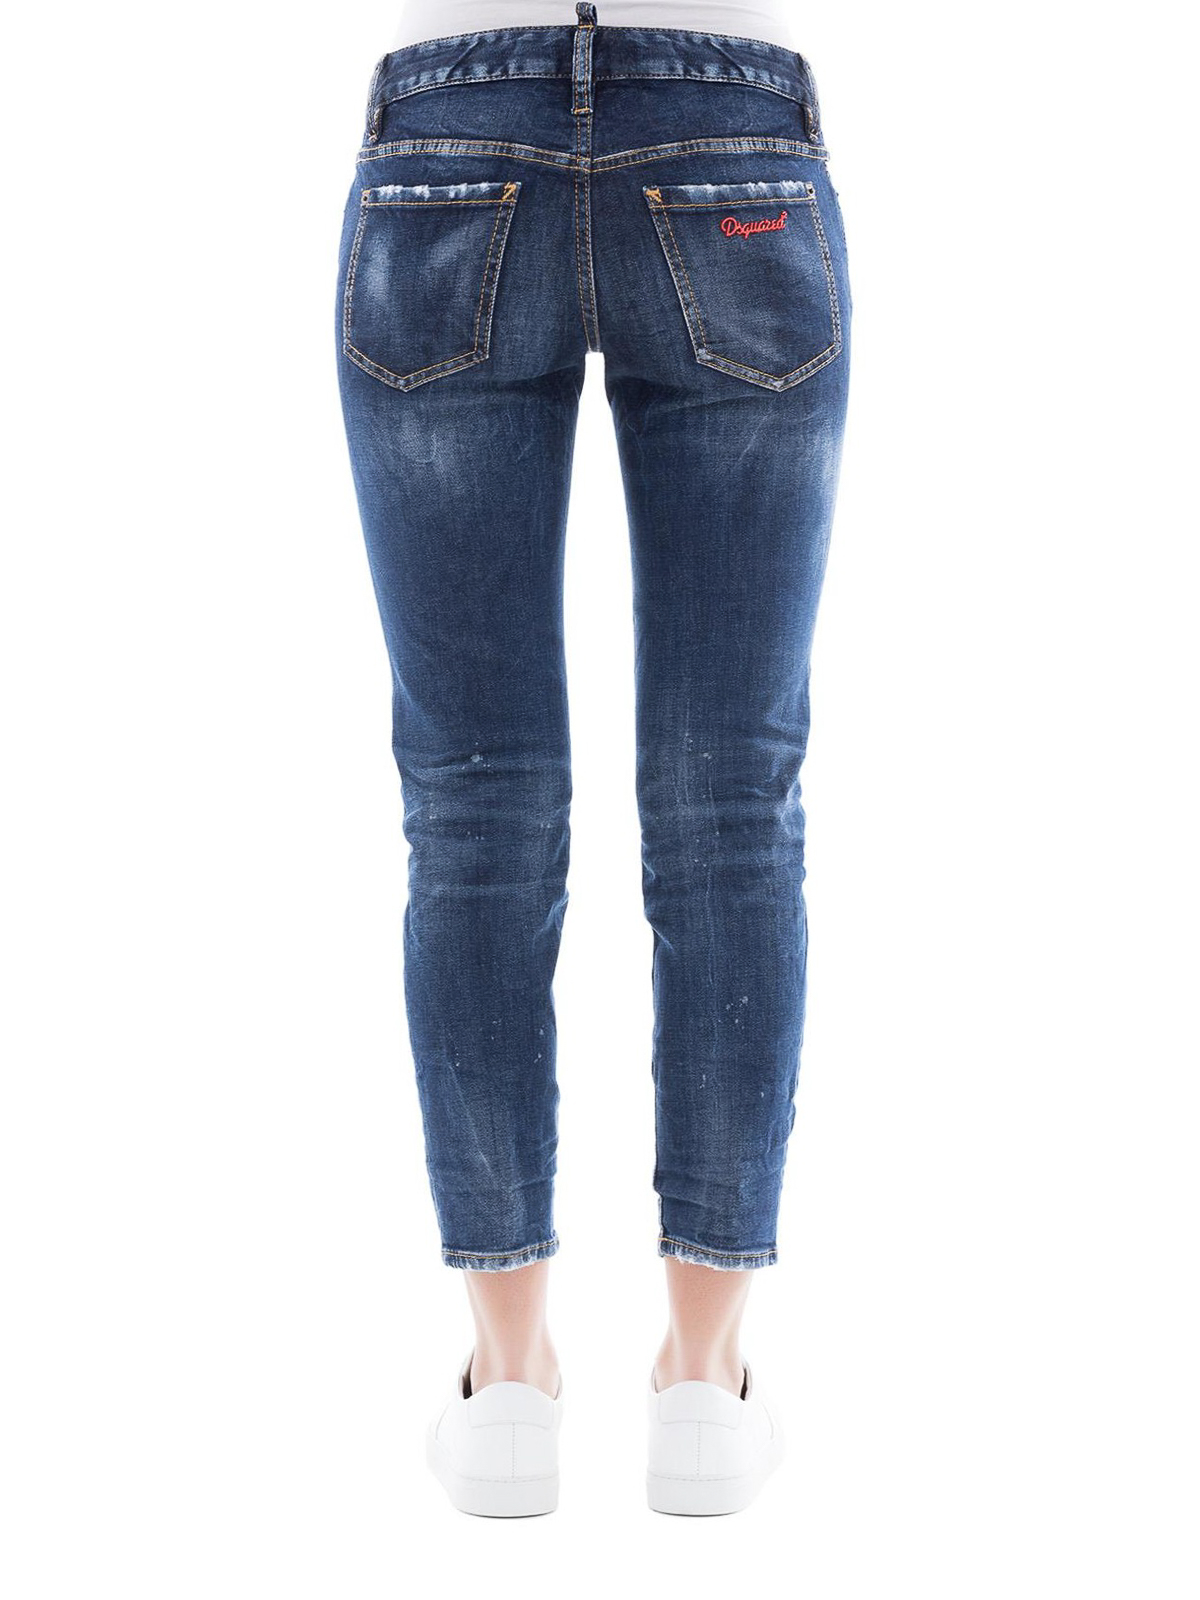 jeans dsquared online